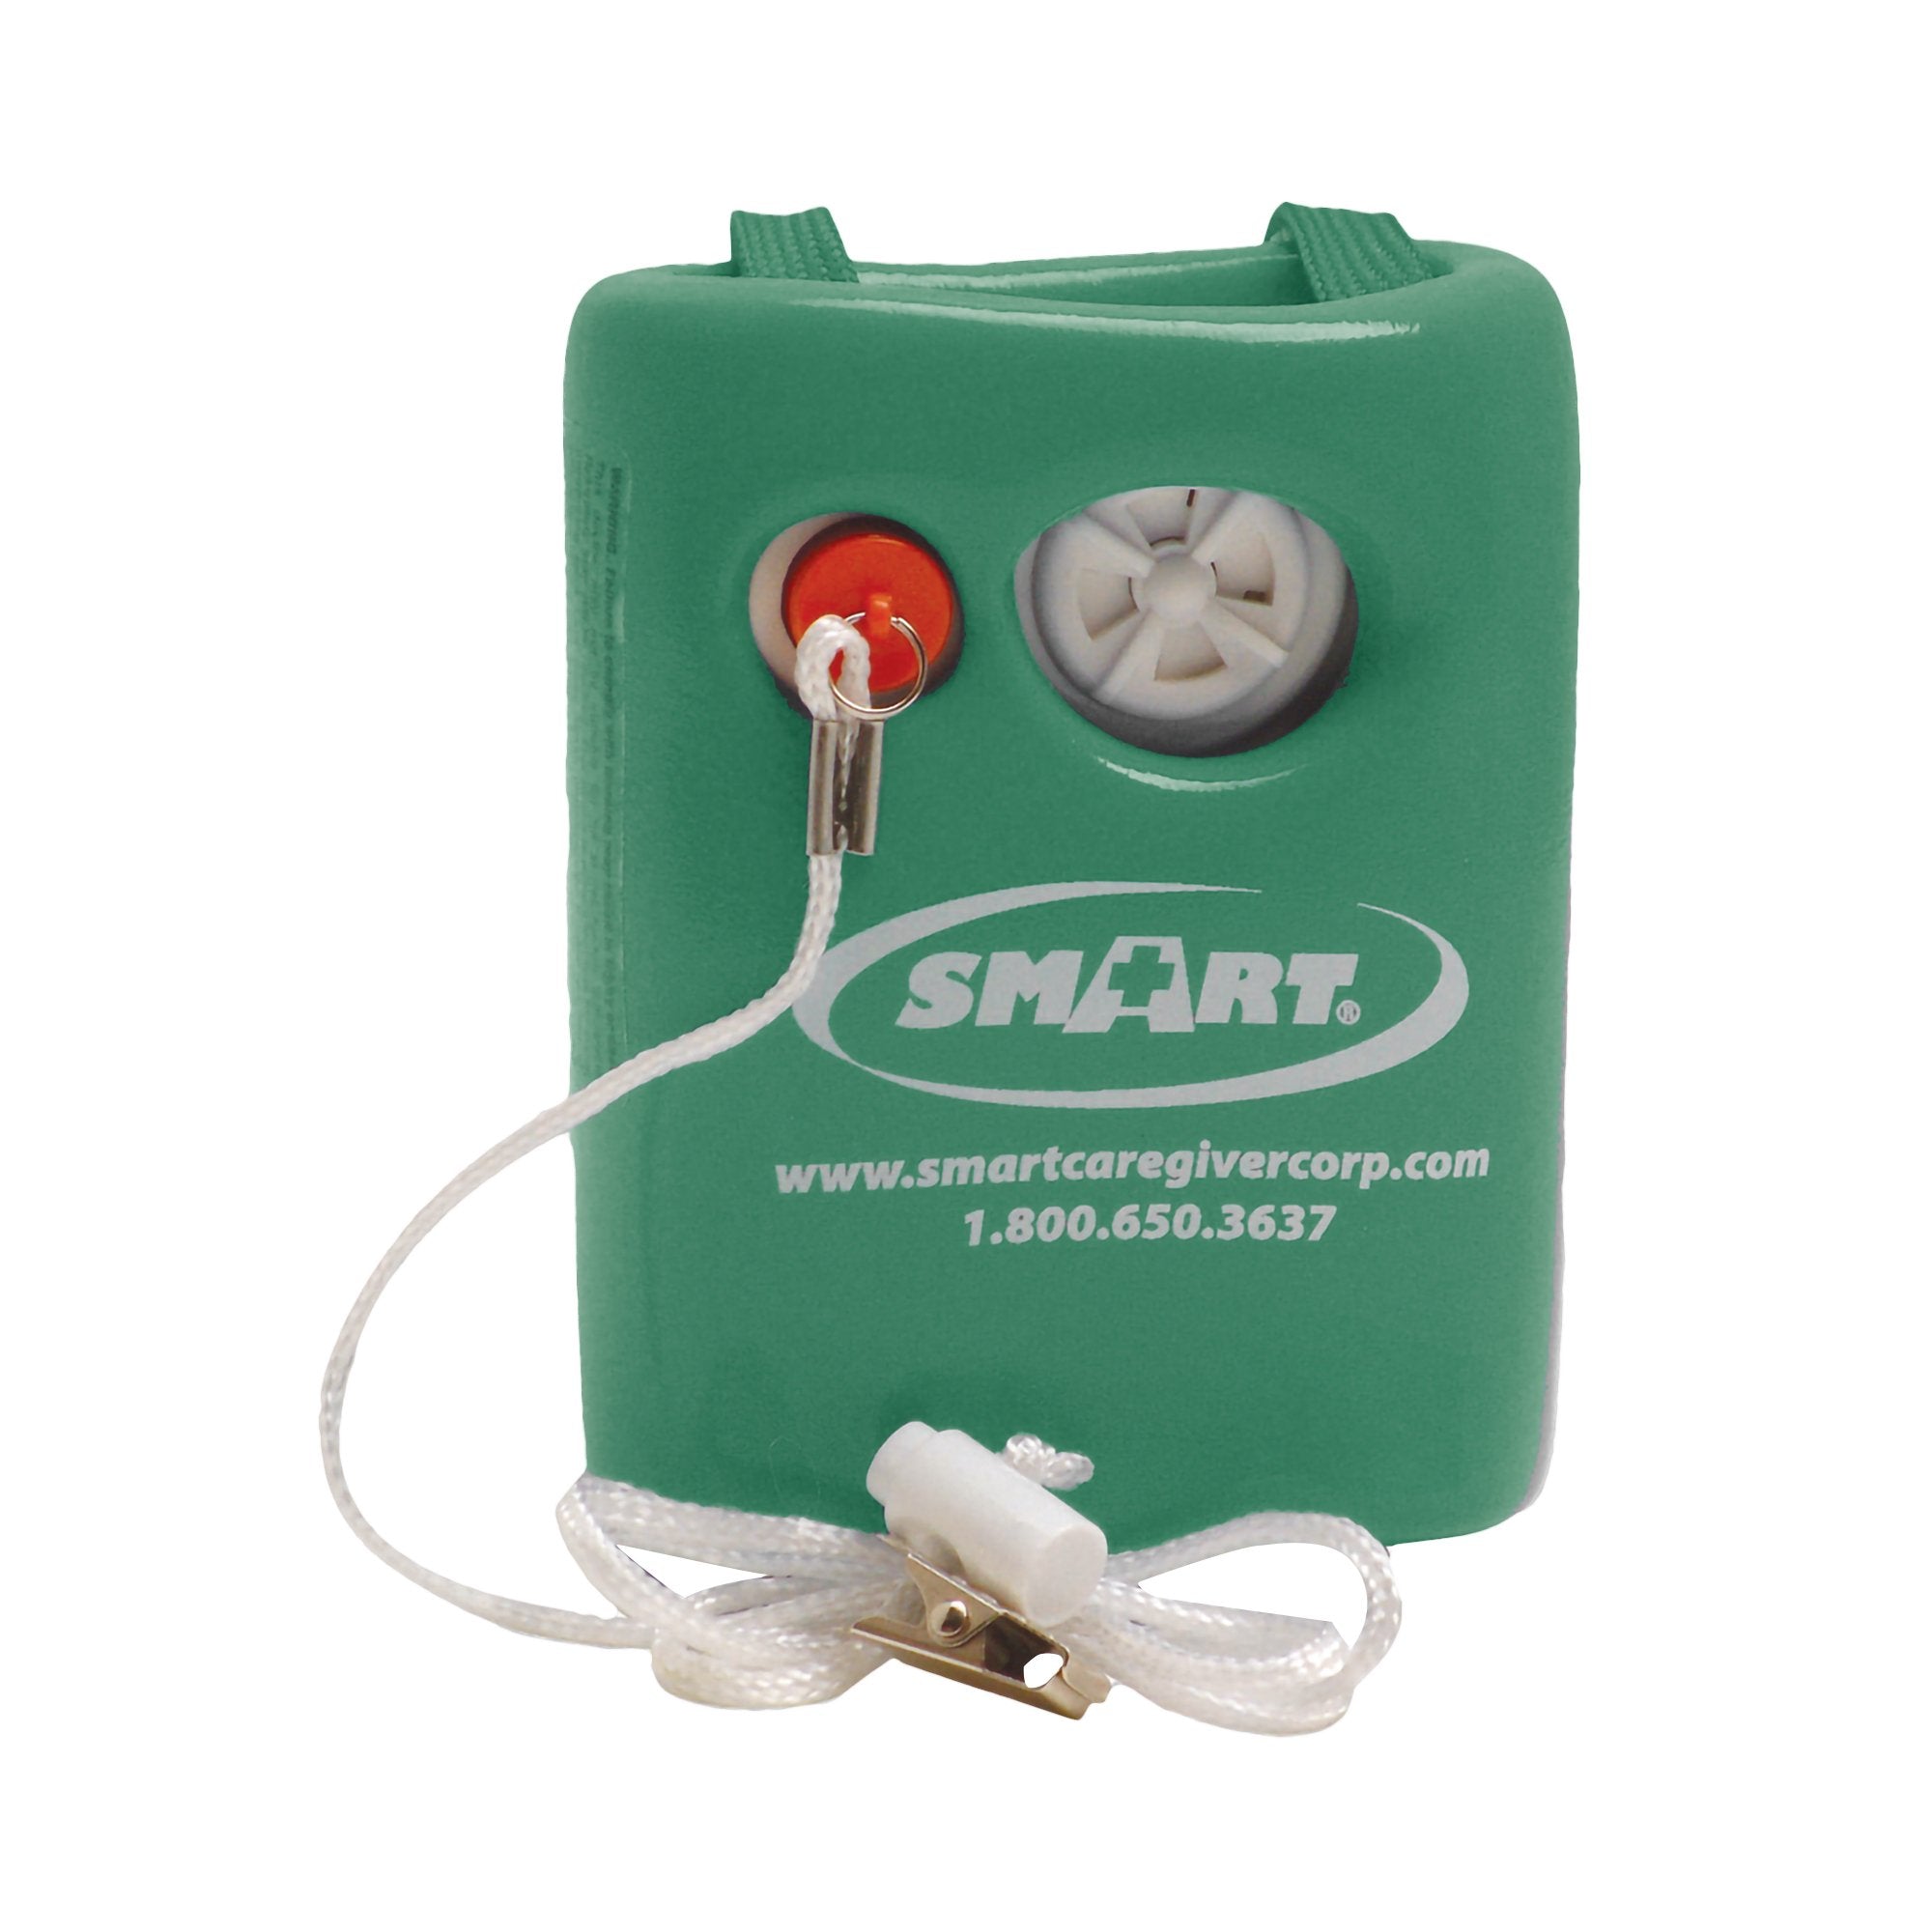 Alarm System Smart Caregiverª